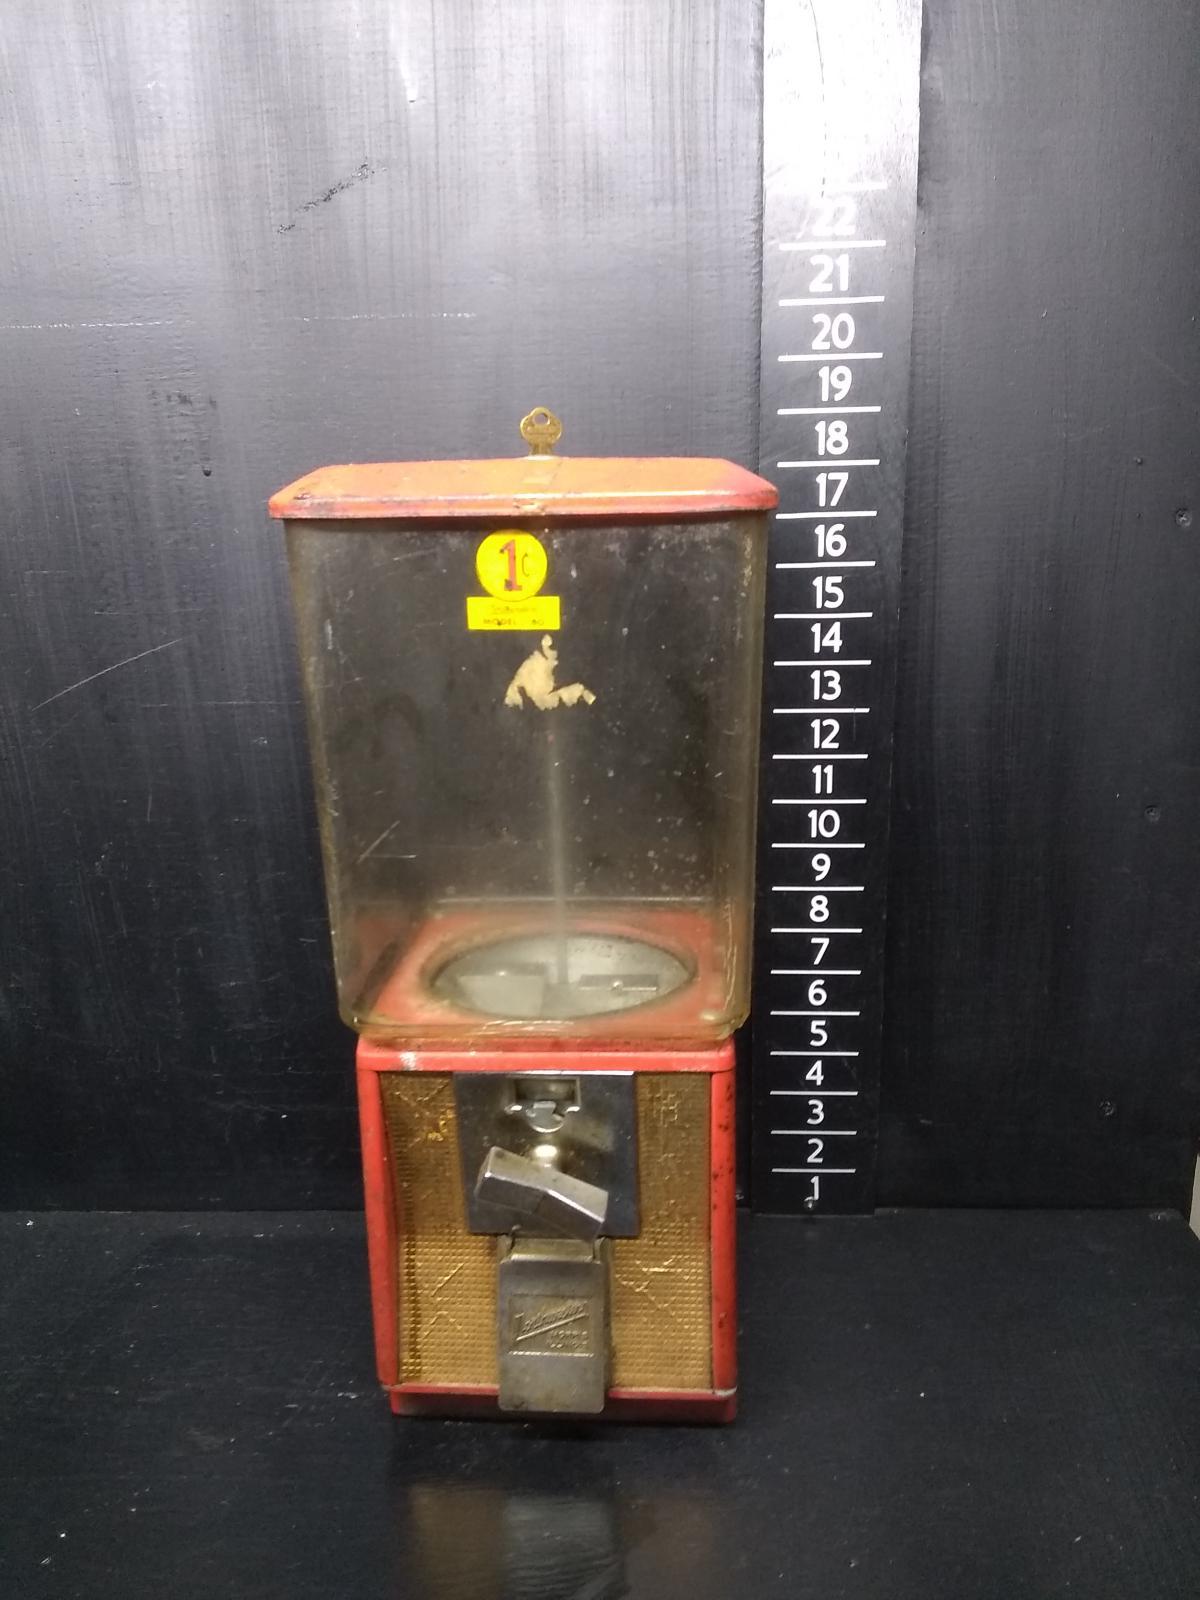 Antique Northwestern Gumball Machine